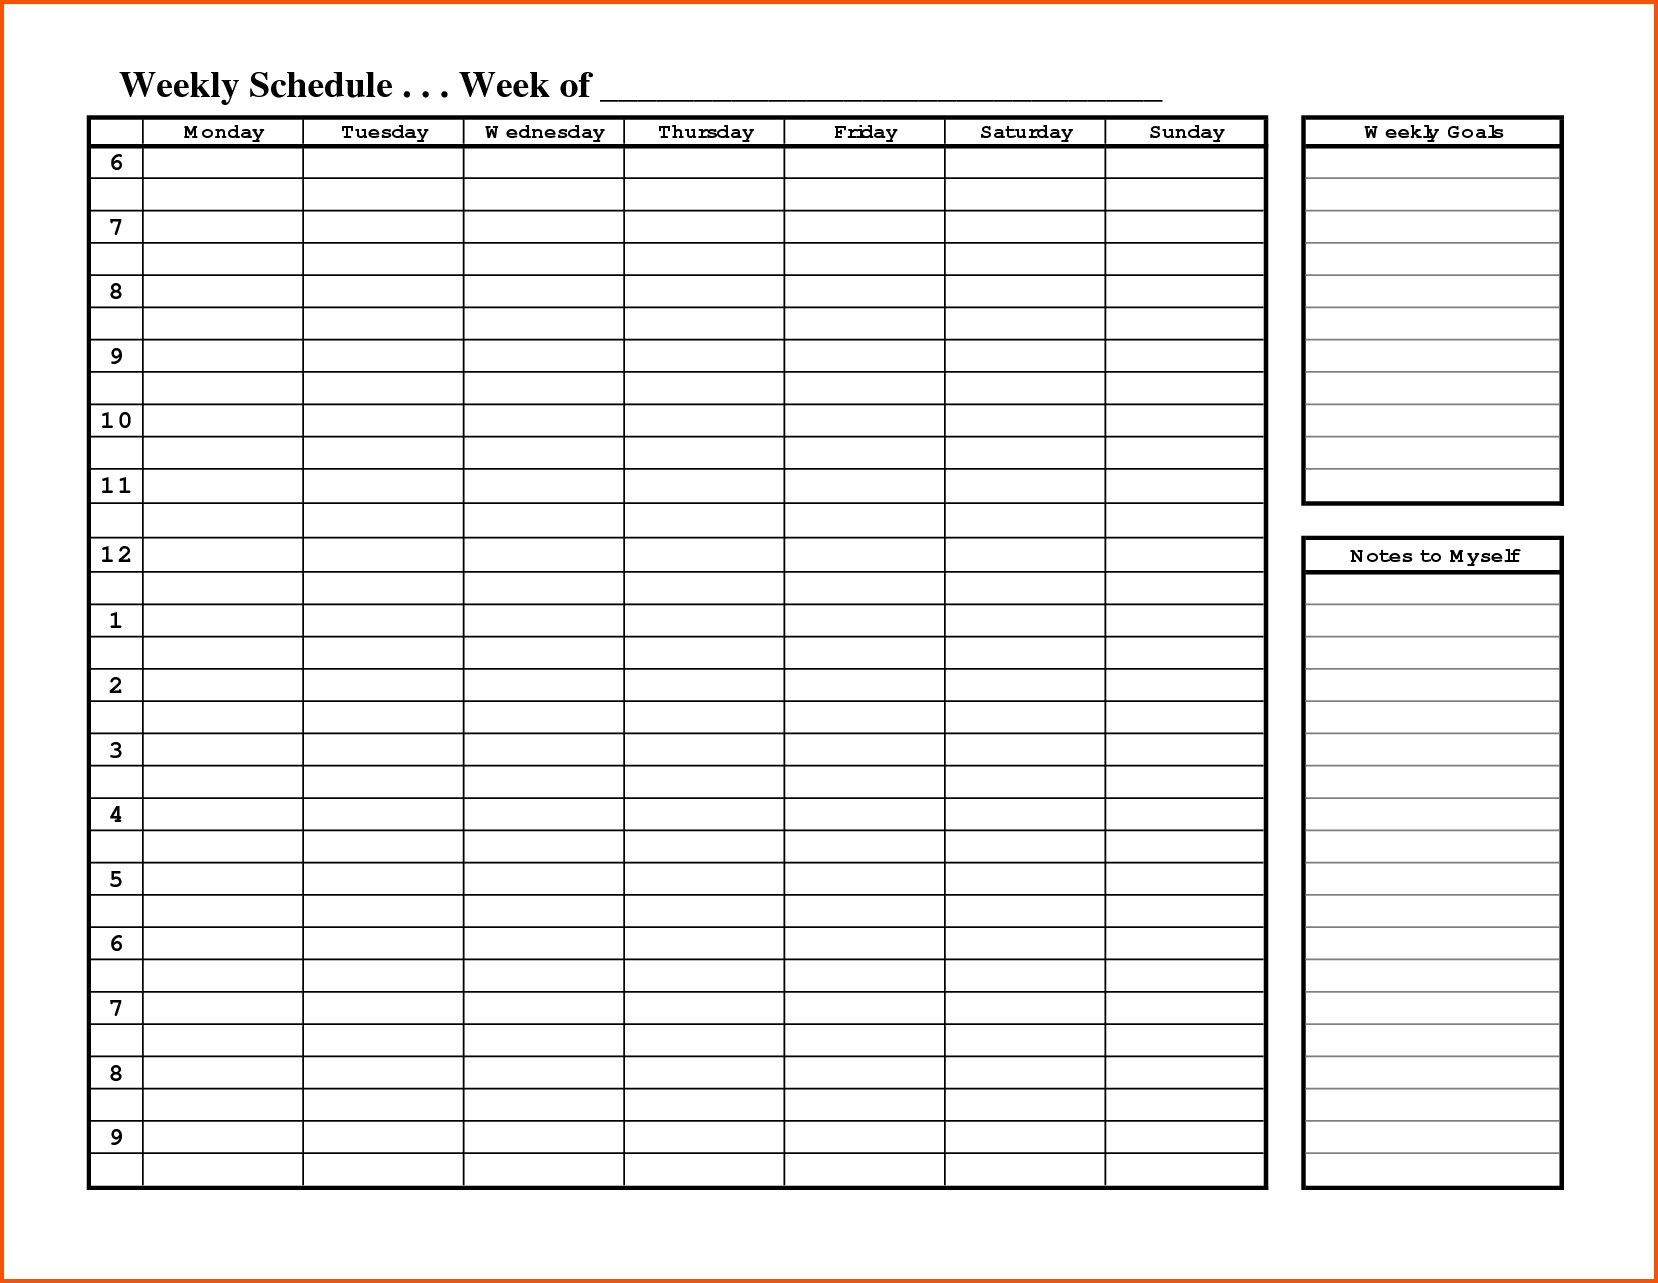 Free Printable Weekly Employee Schedule Template With Weekly Goals  Printable Blank Weekly Employee Schedule